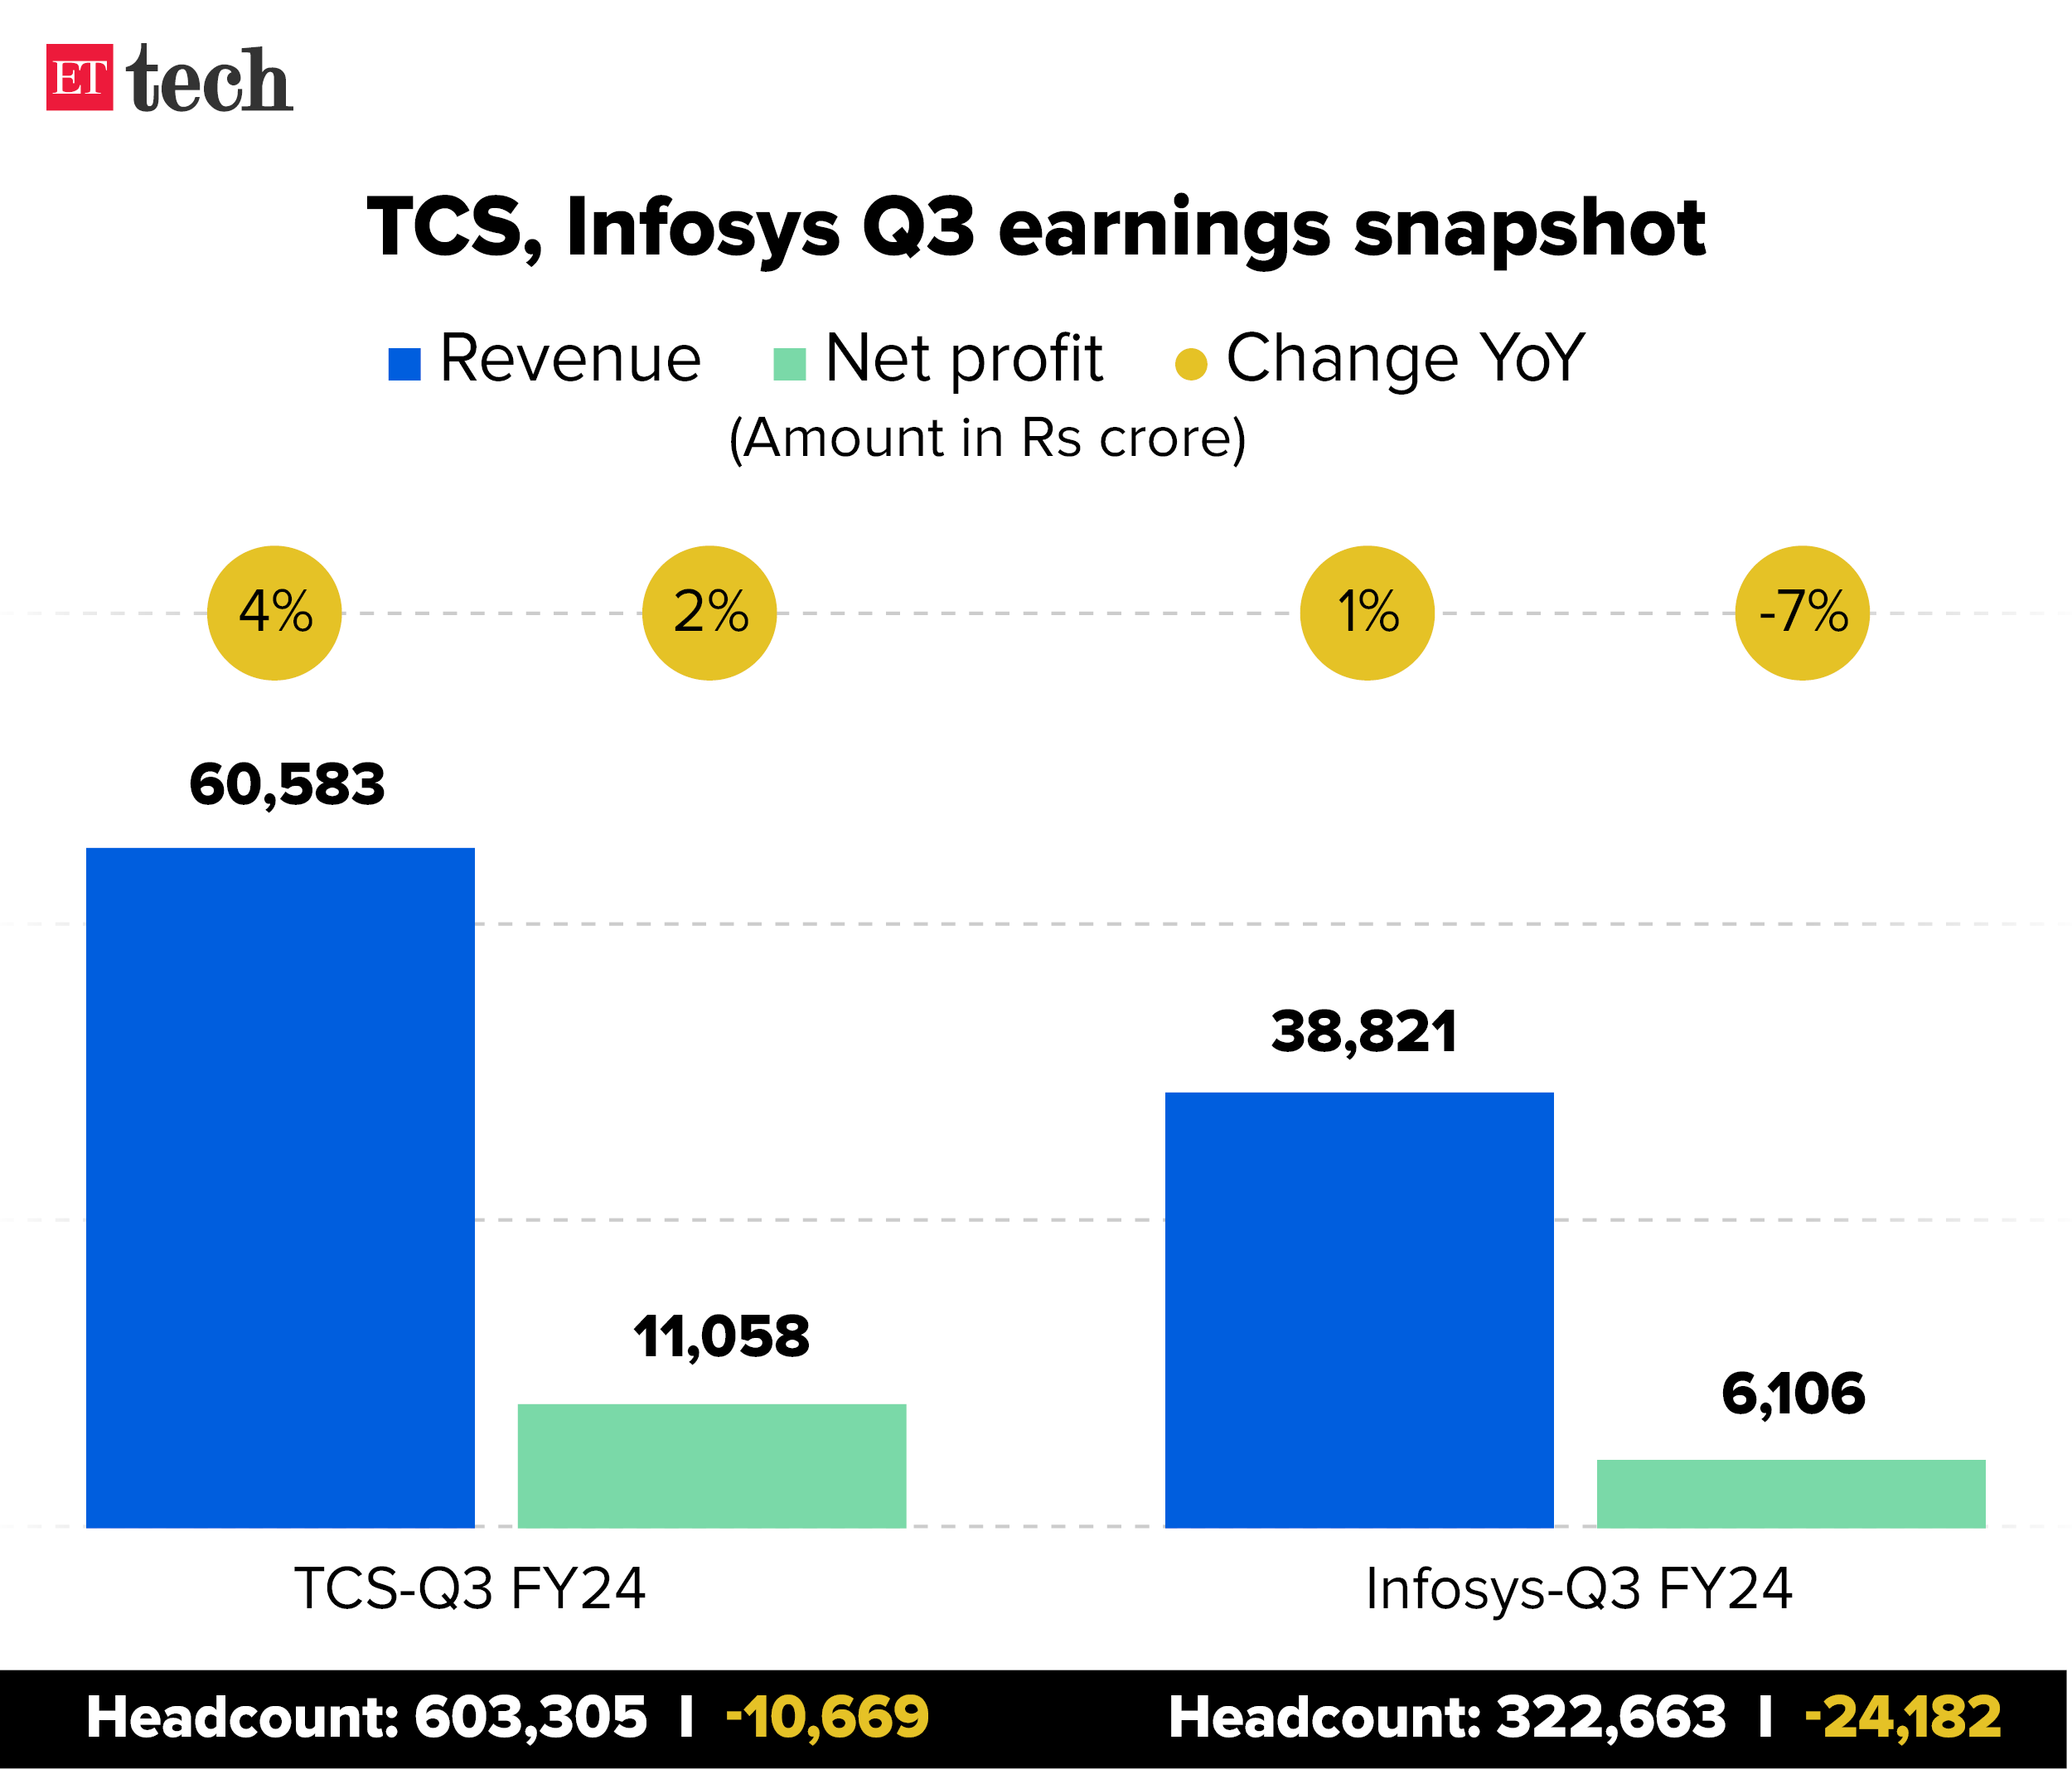 TCS, Infosys Q3 earnings